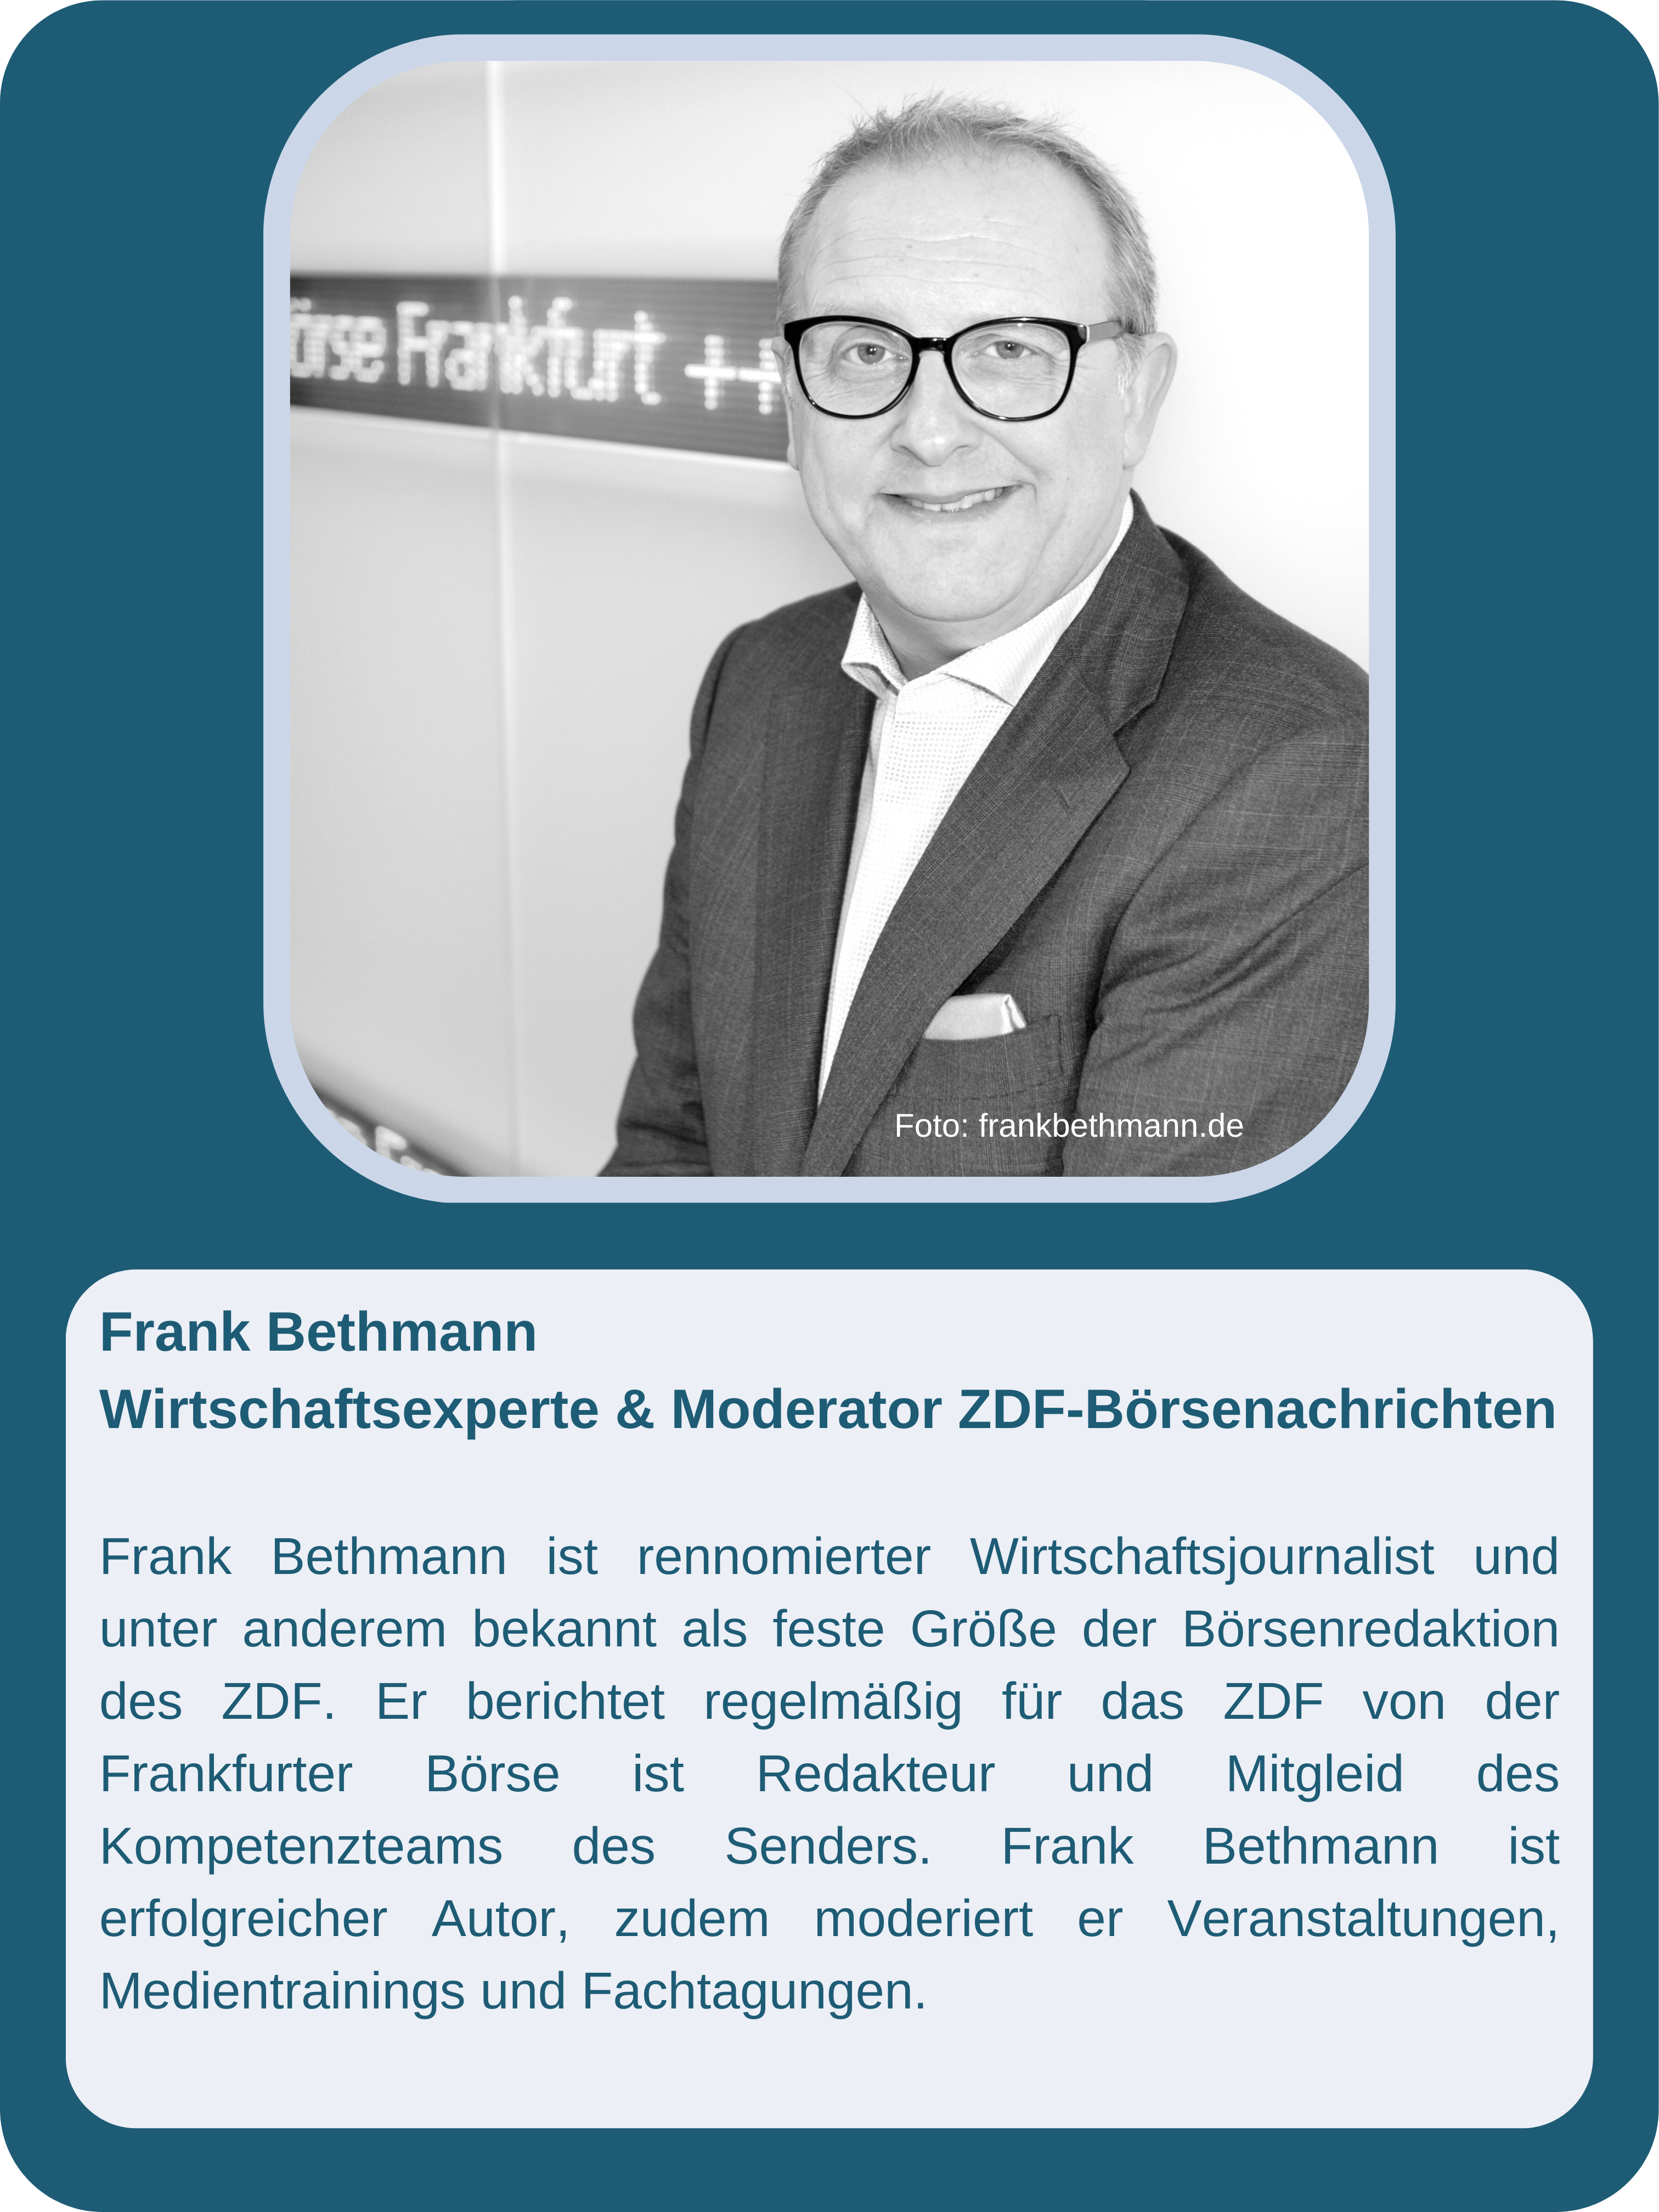 Frank Bethmann